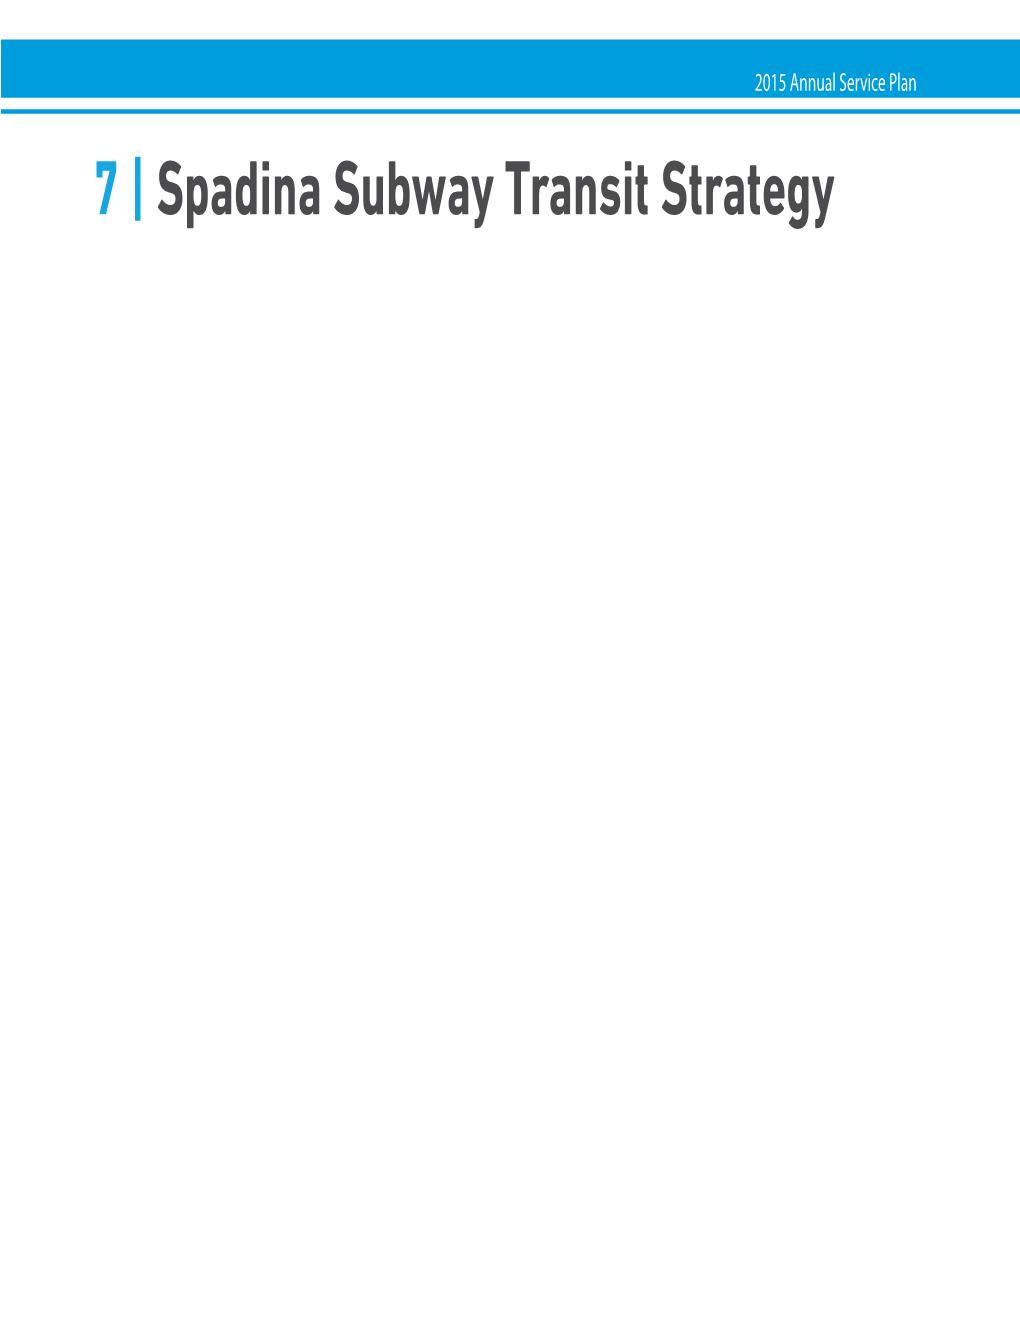 7 | Spadina Subway Transit Strategy 2015 Annual Service Plan